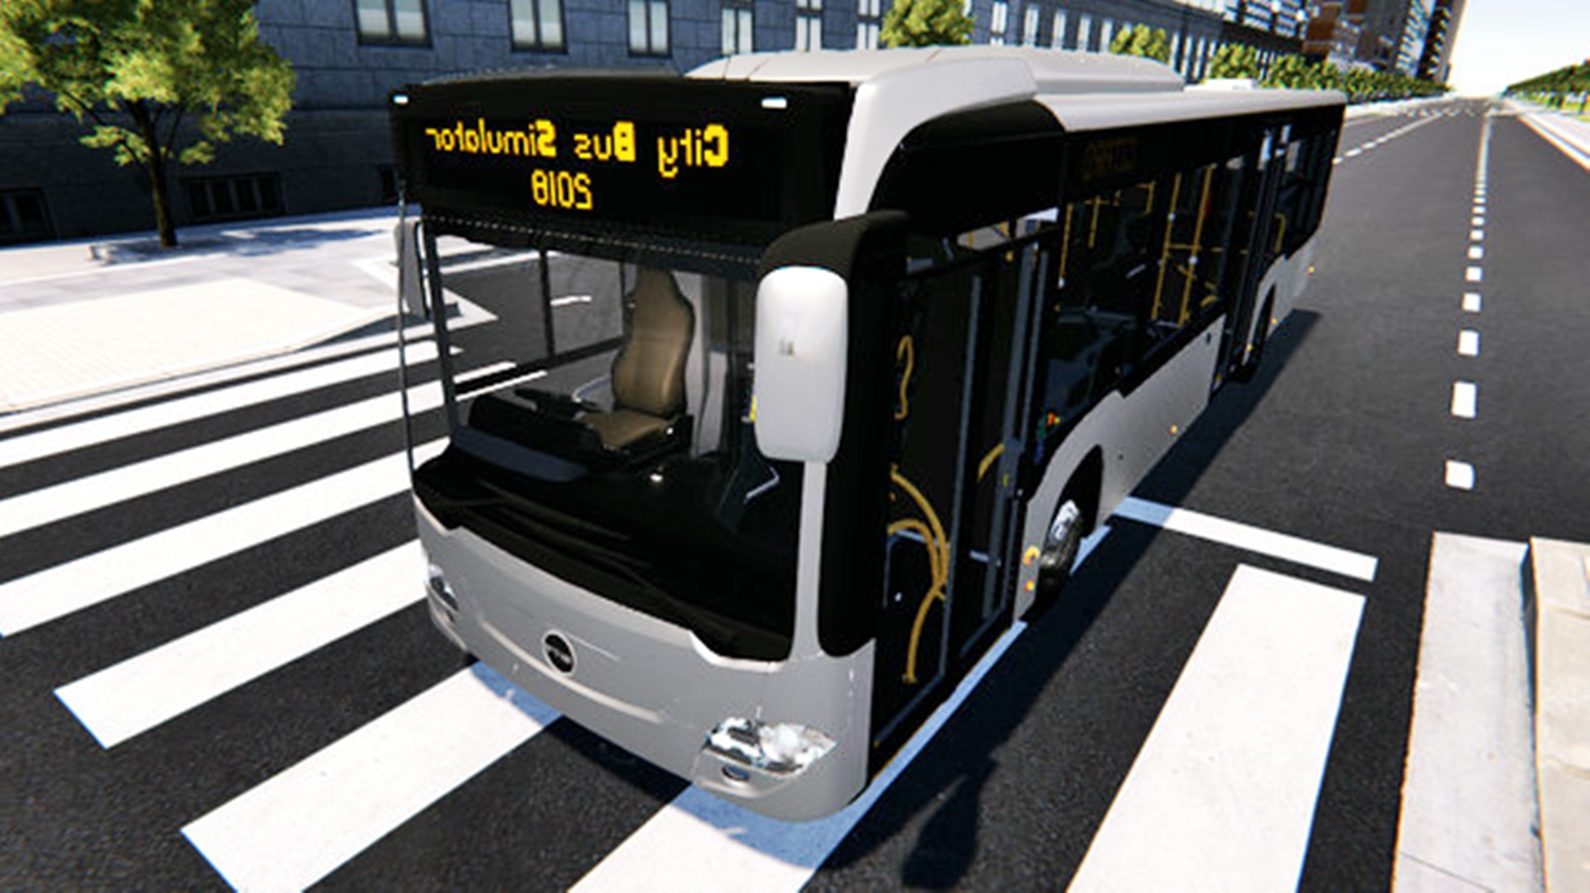 download City Bus Driving Simulator 3D free